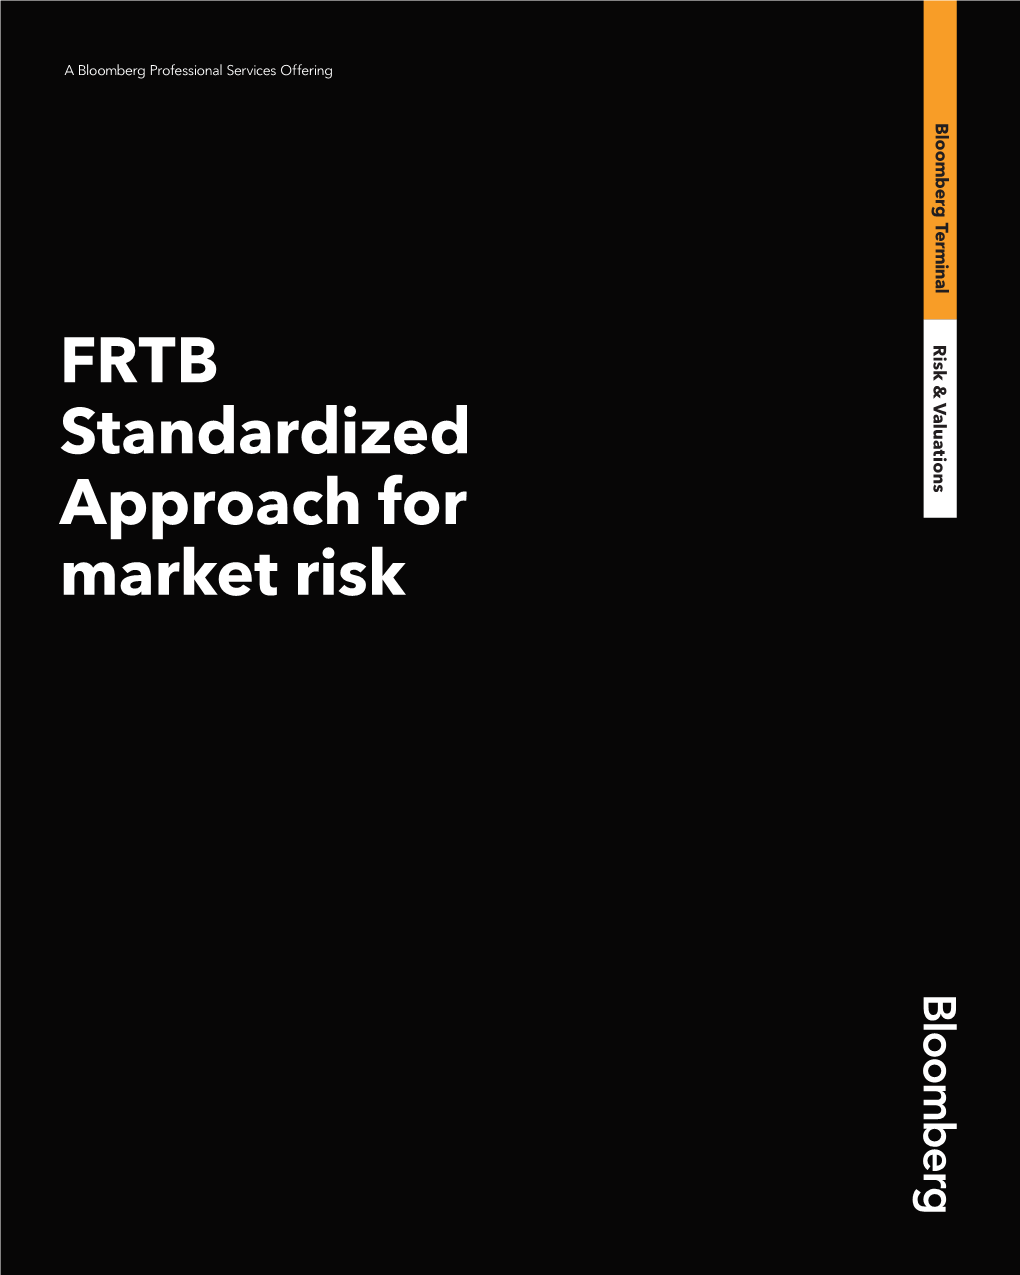 FRTB Standardized Approach for Market Risk